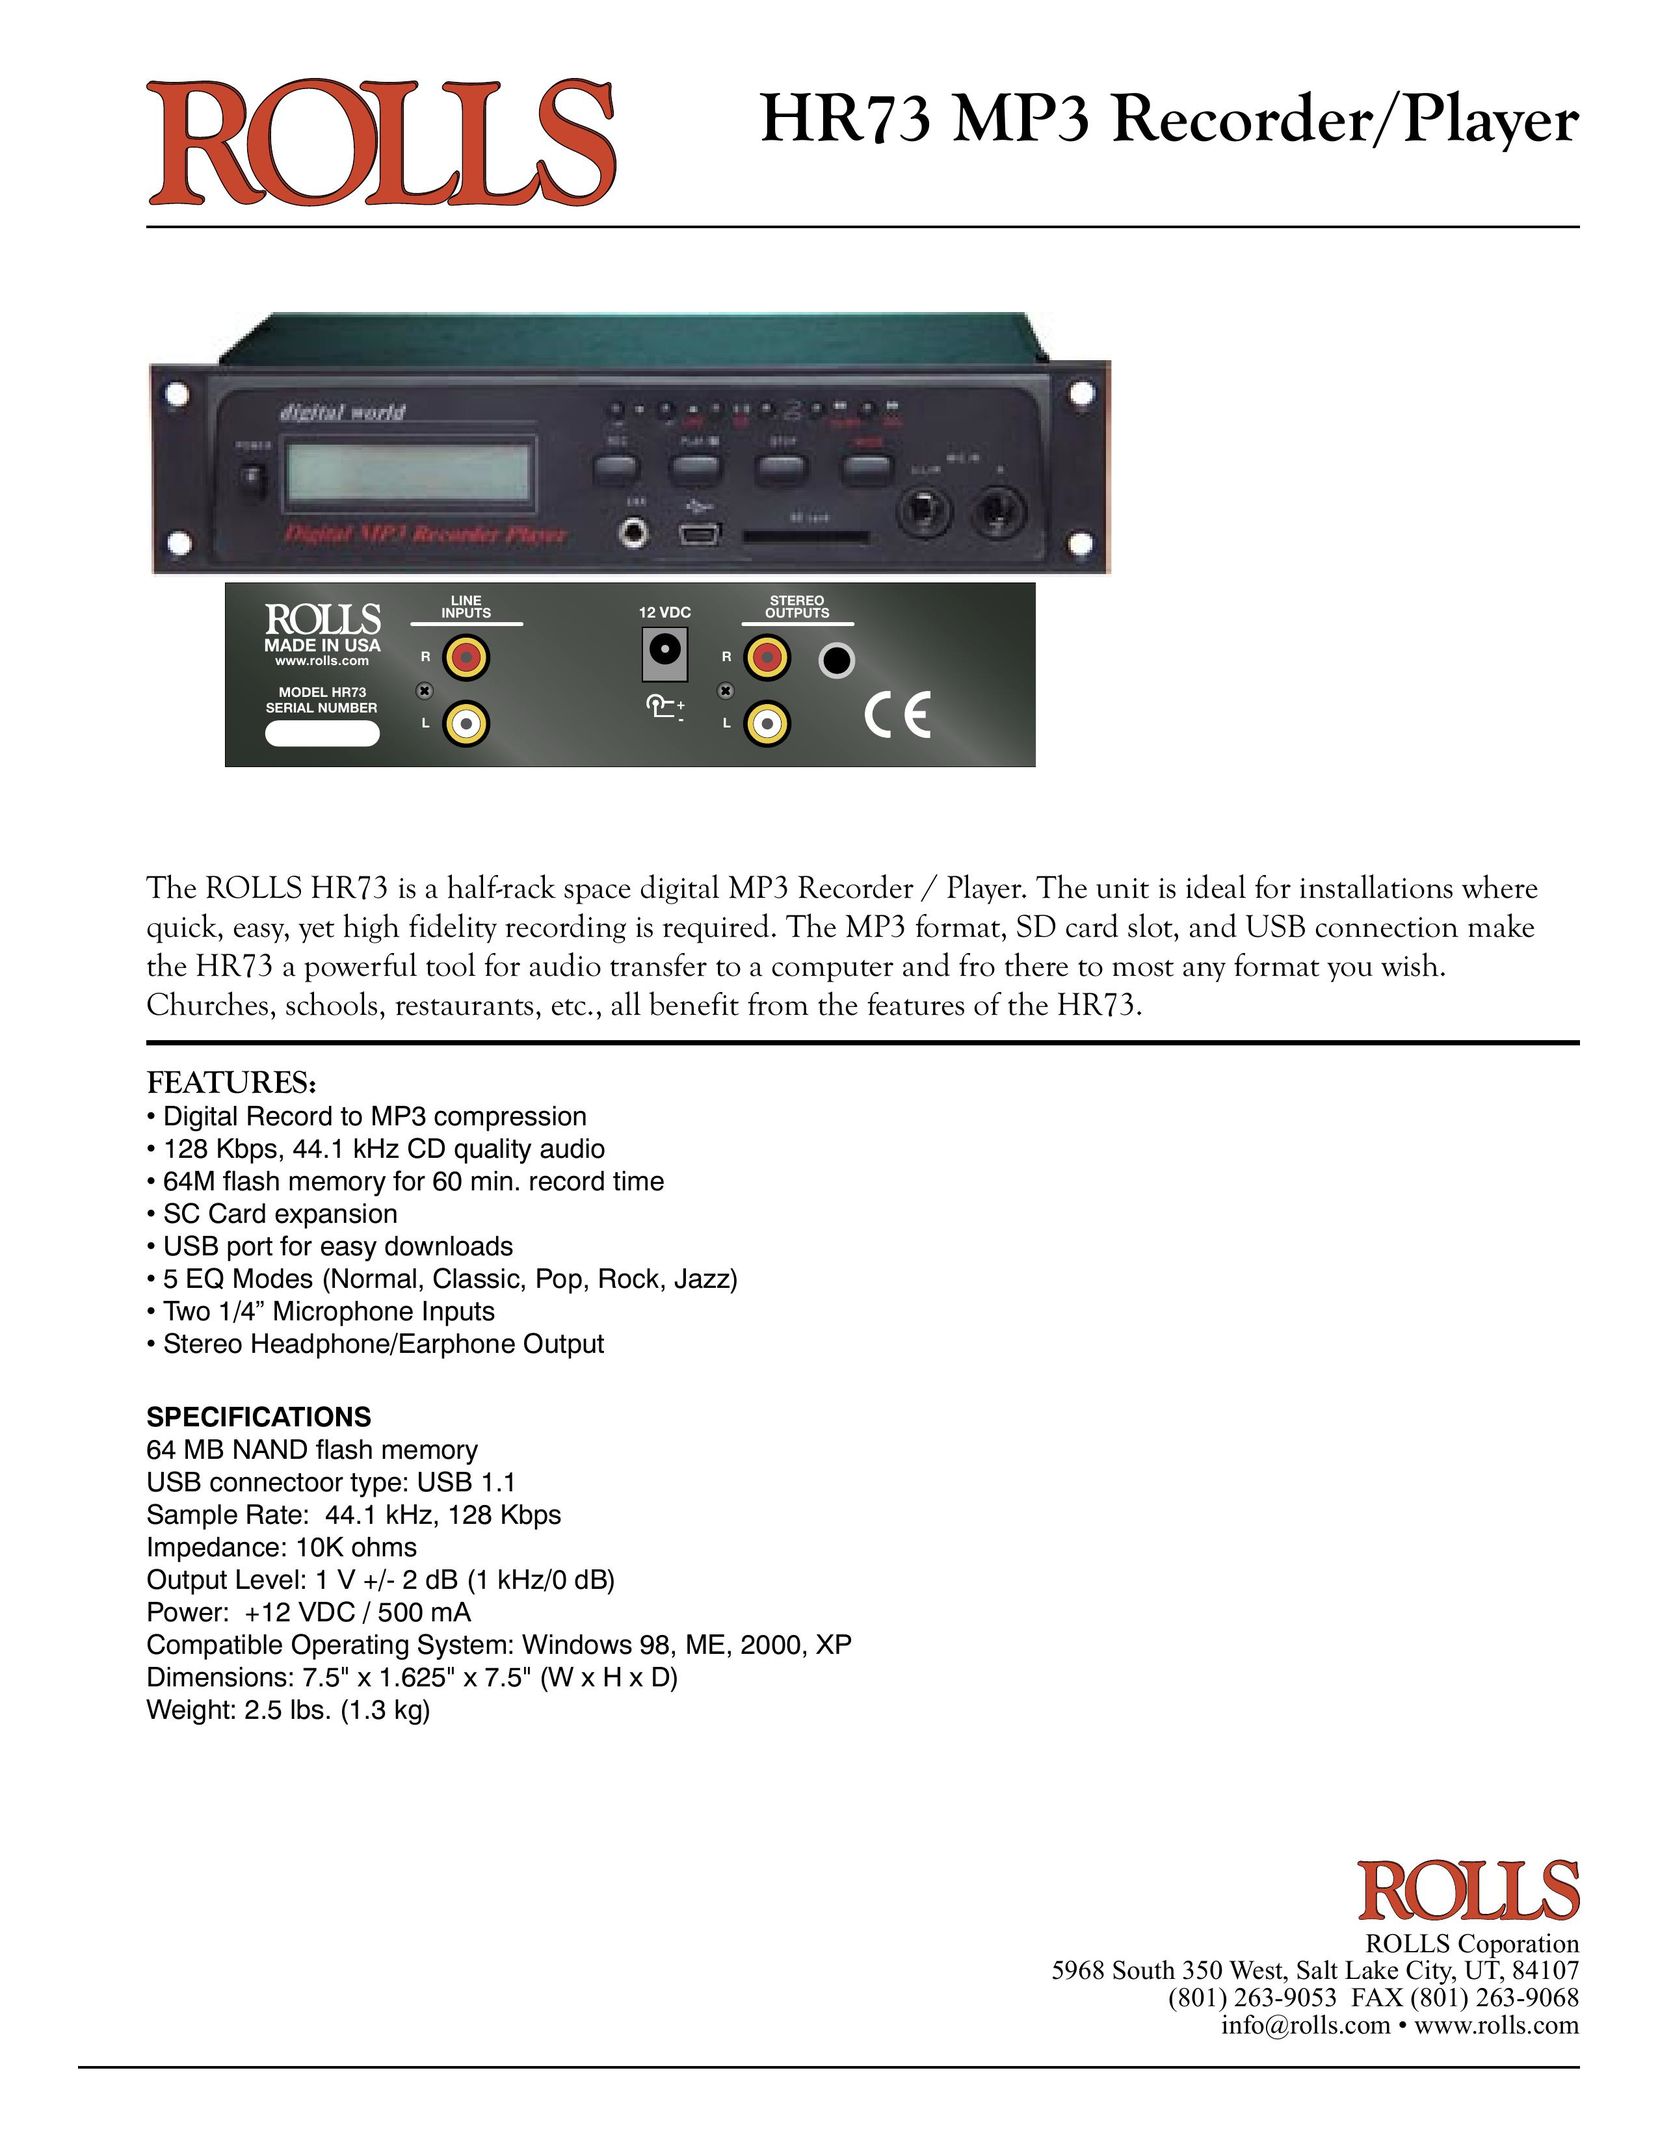 Rolls HR73 MP3 Player User Manual